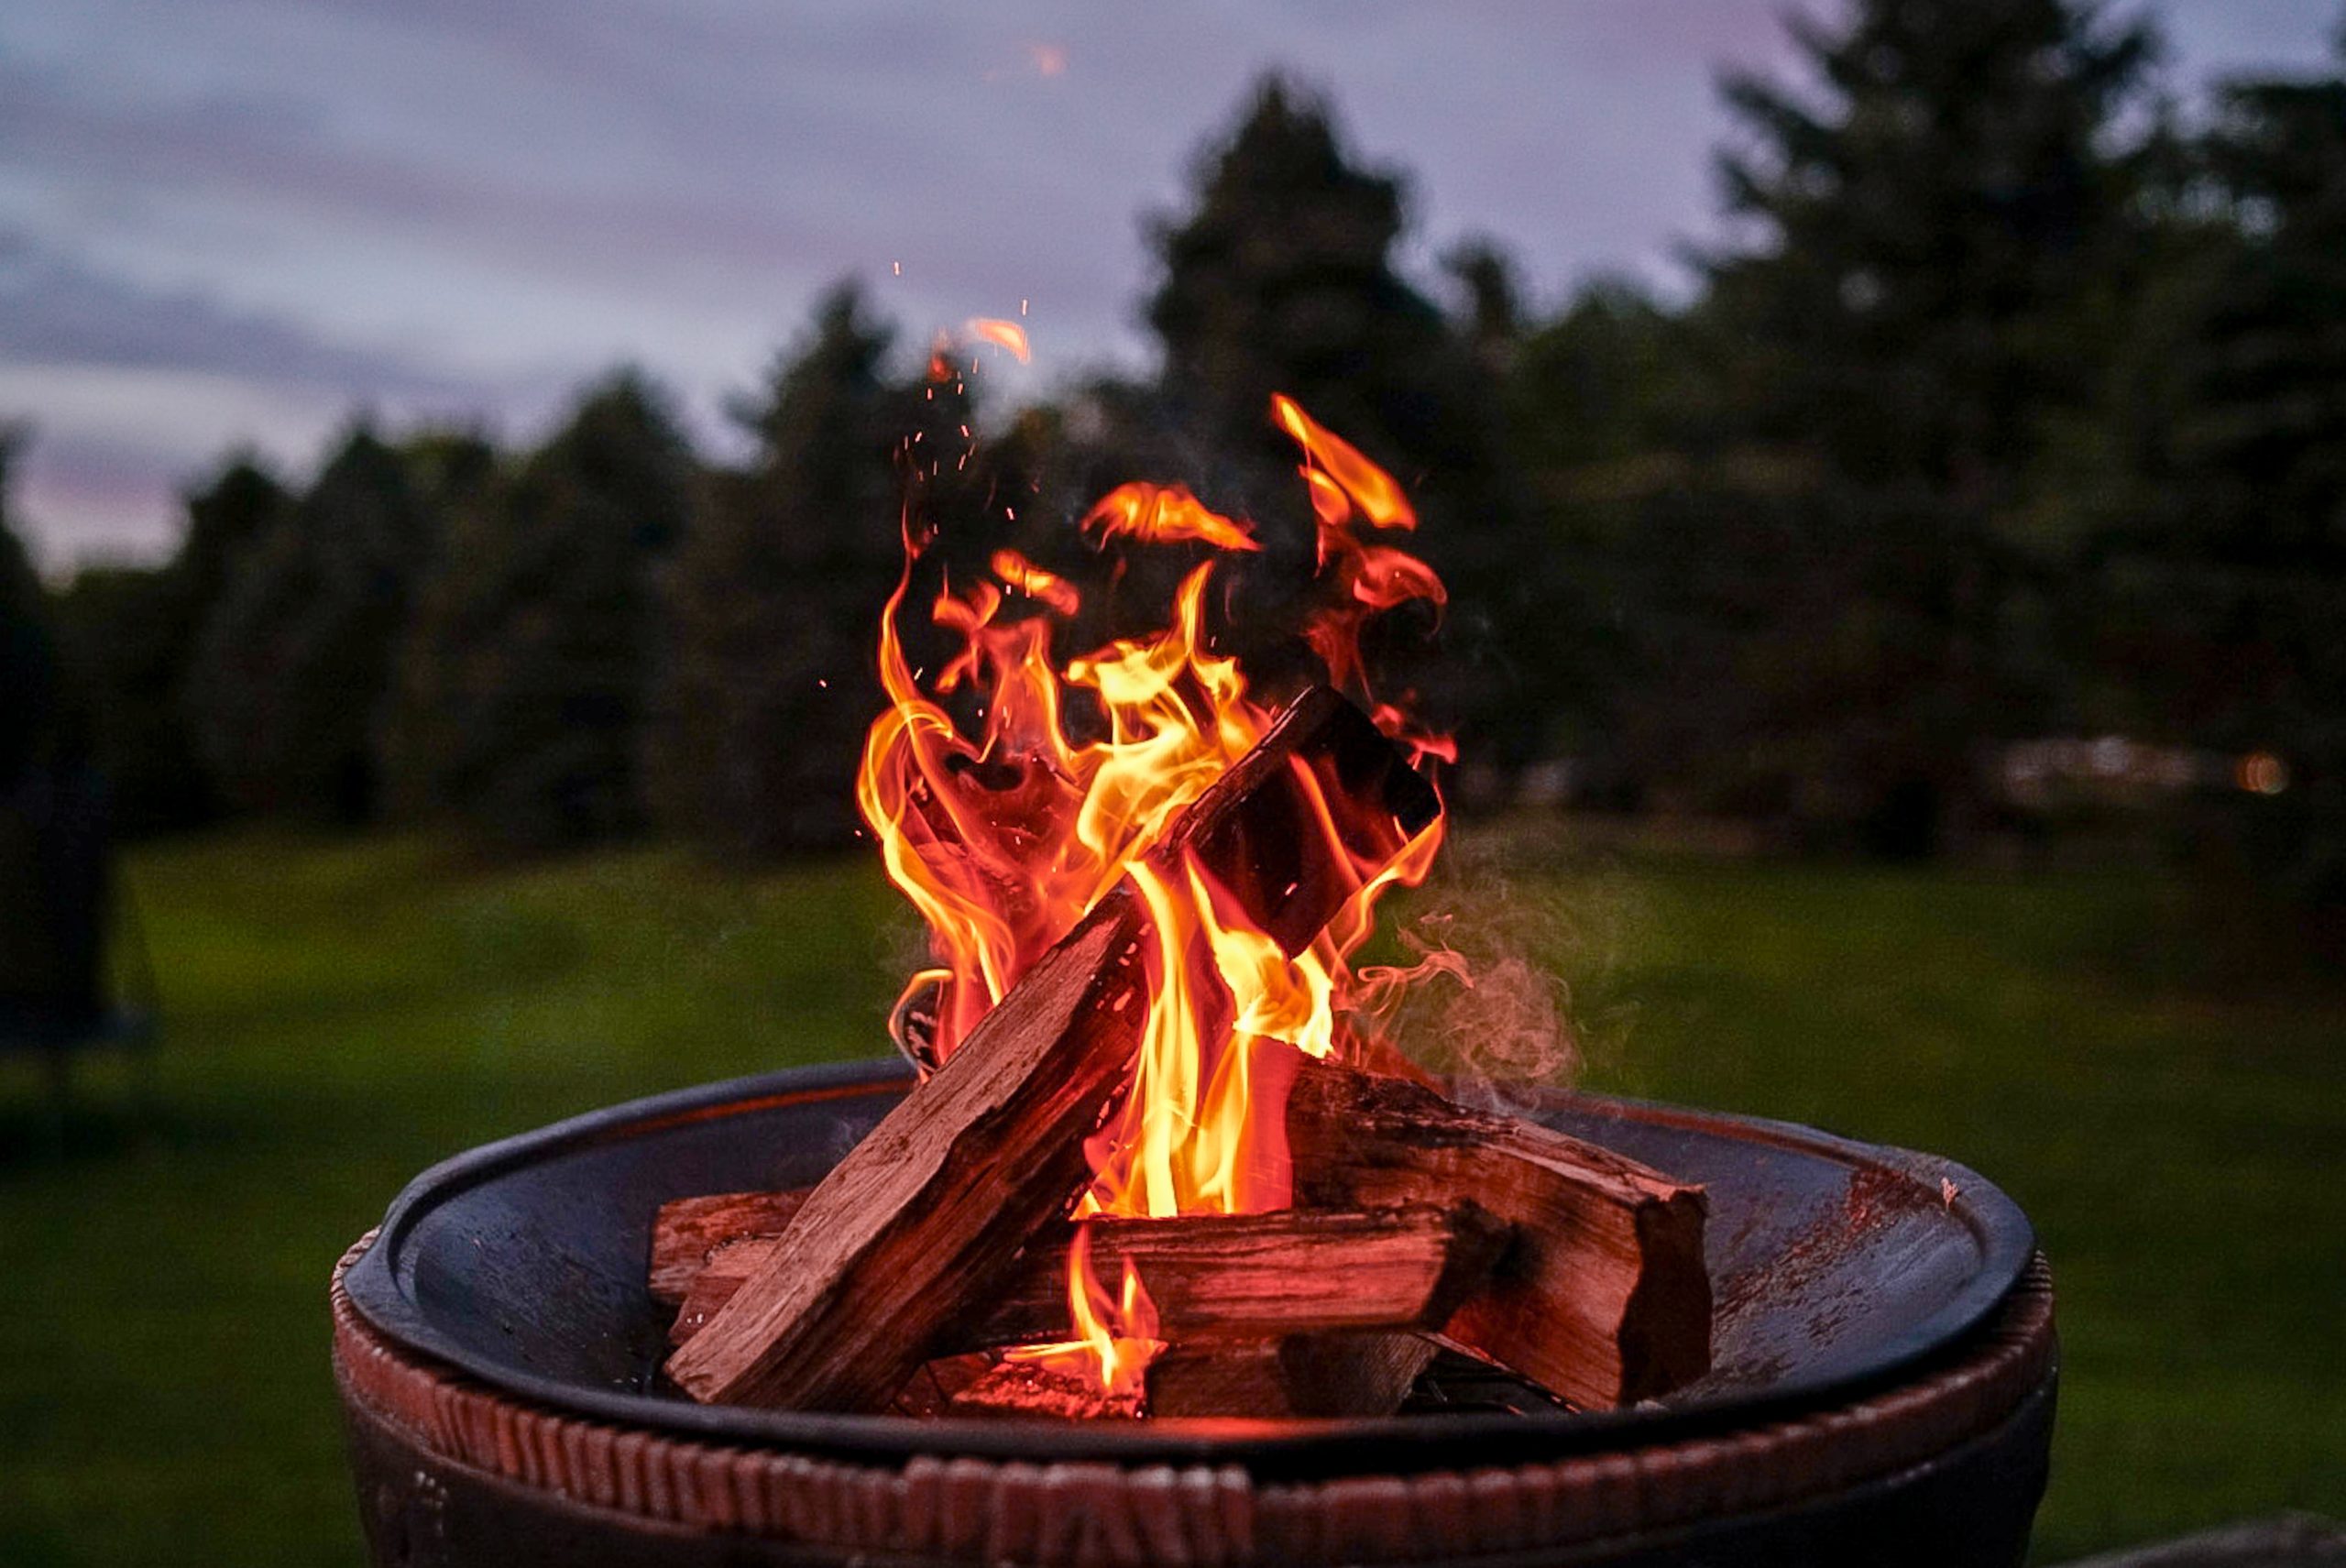 Unis Vers Nature: Quel allume-feu utiliser avec un firesteel ?